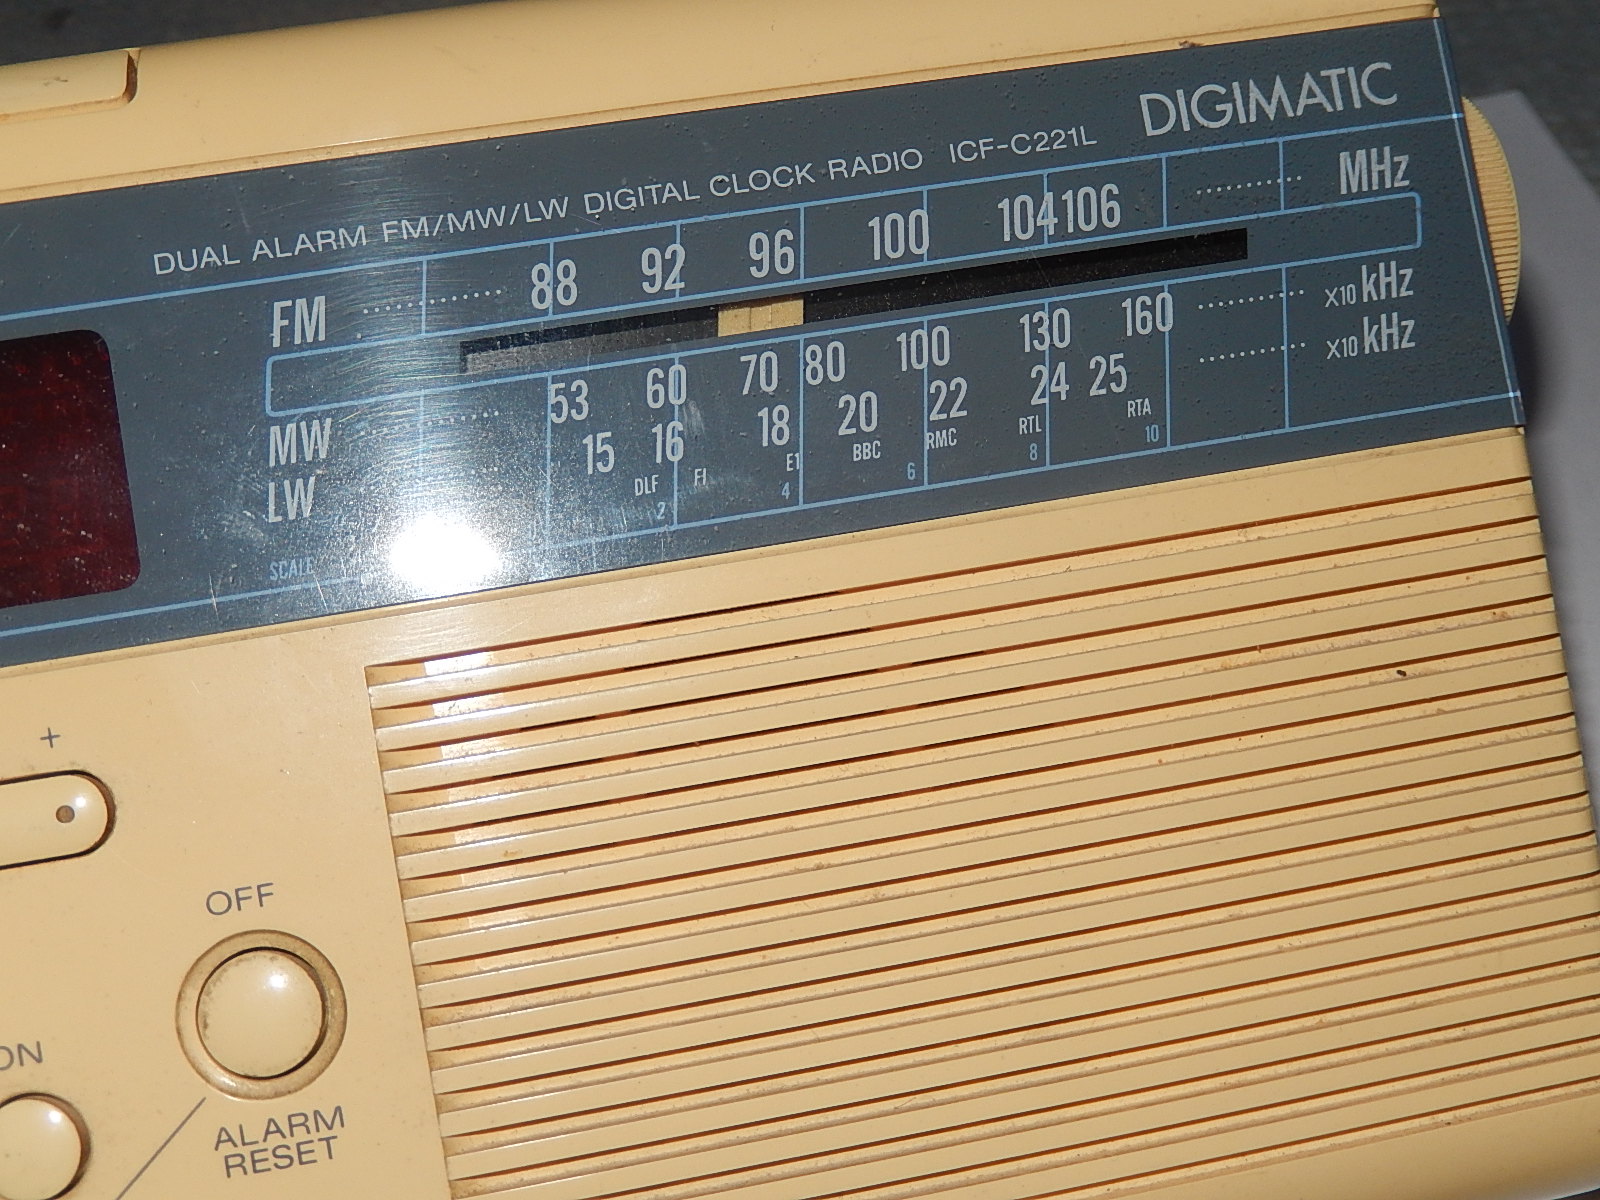 SONY ICF-C221L DIGIMATIC RADIO REVEIL VINTAGE